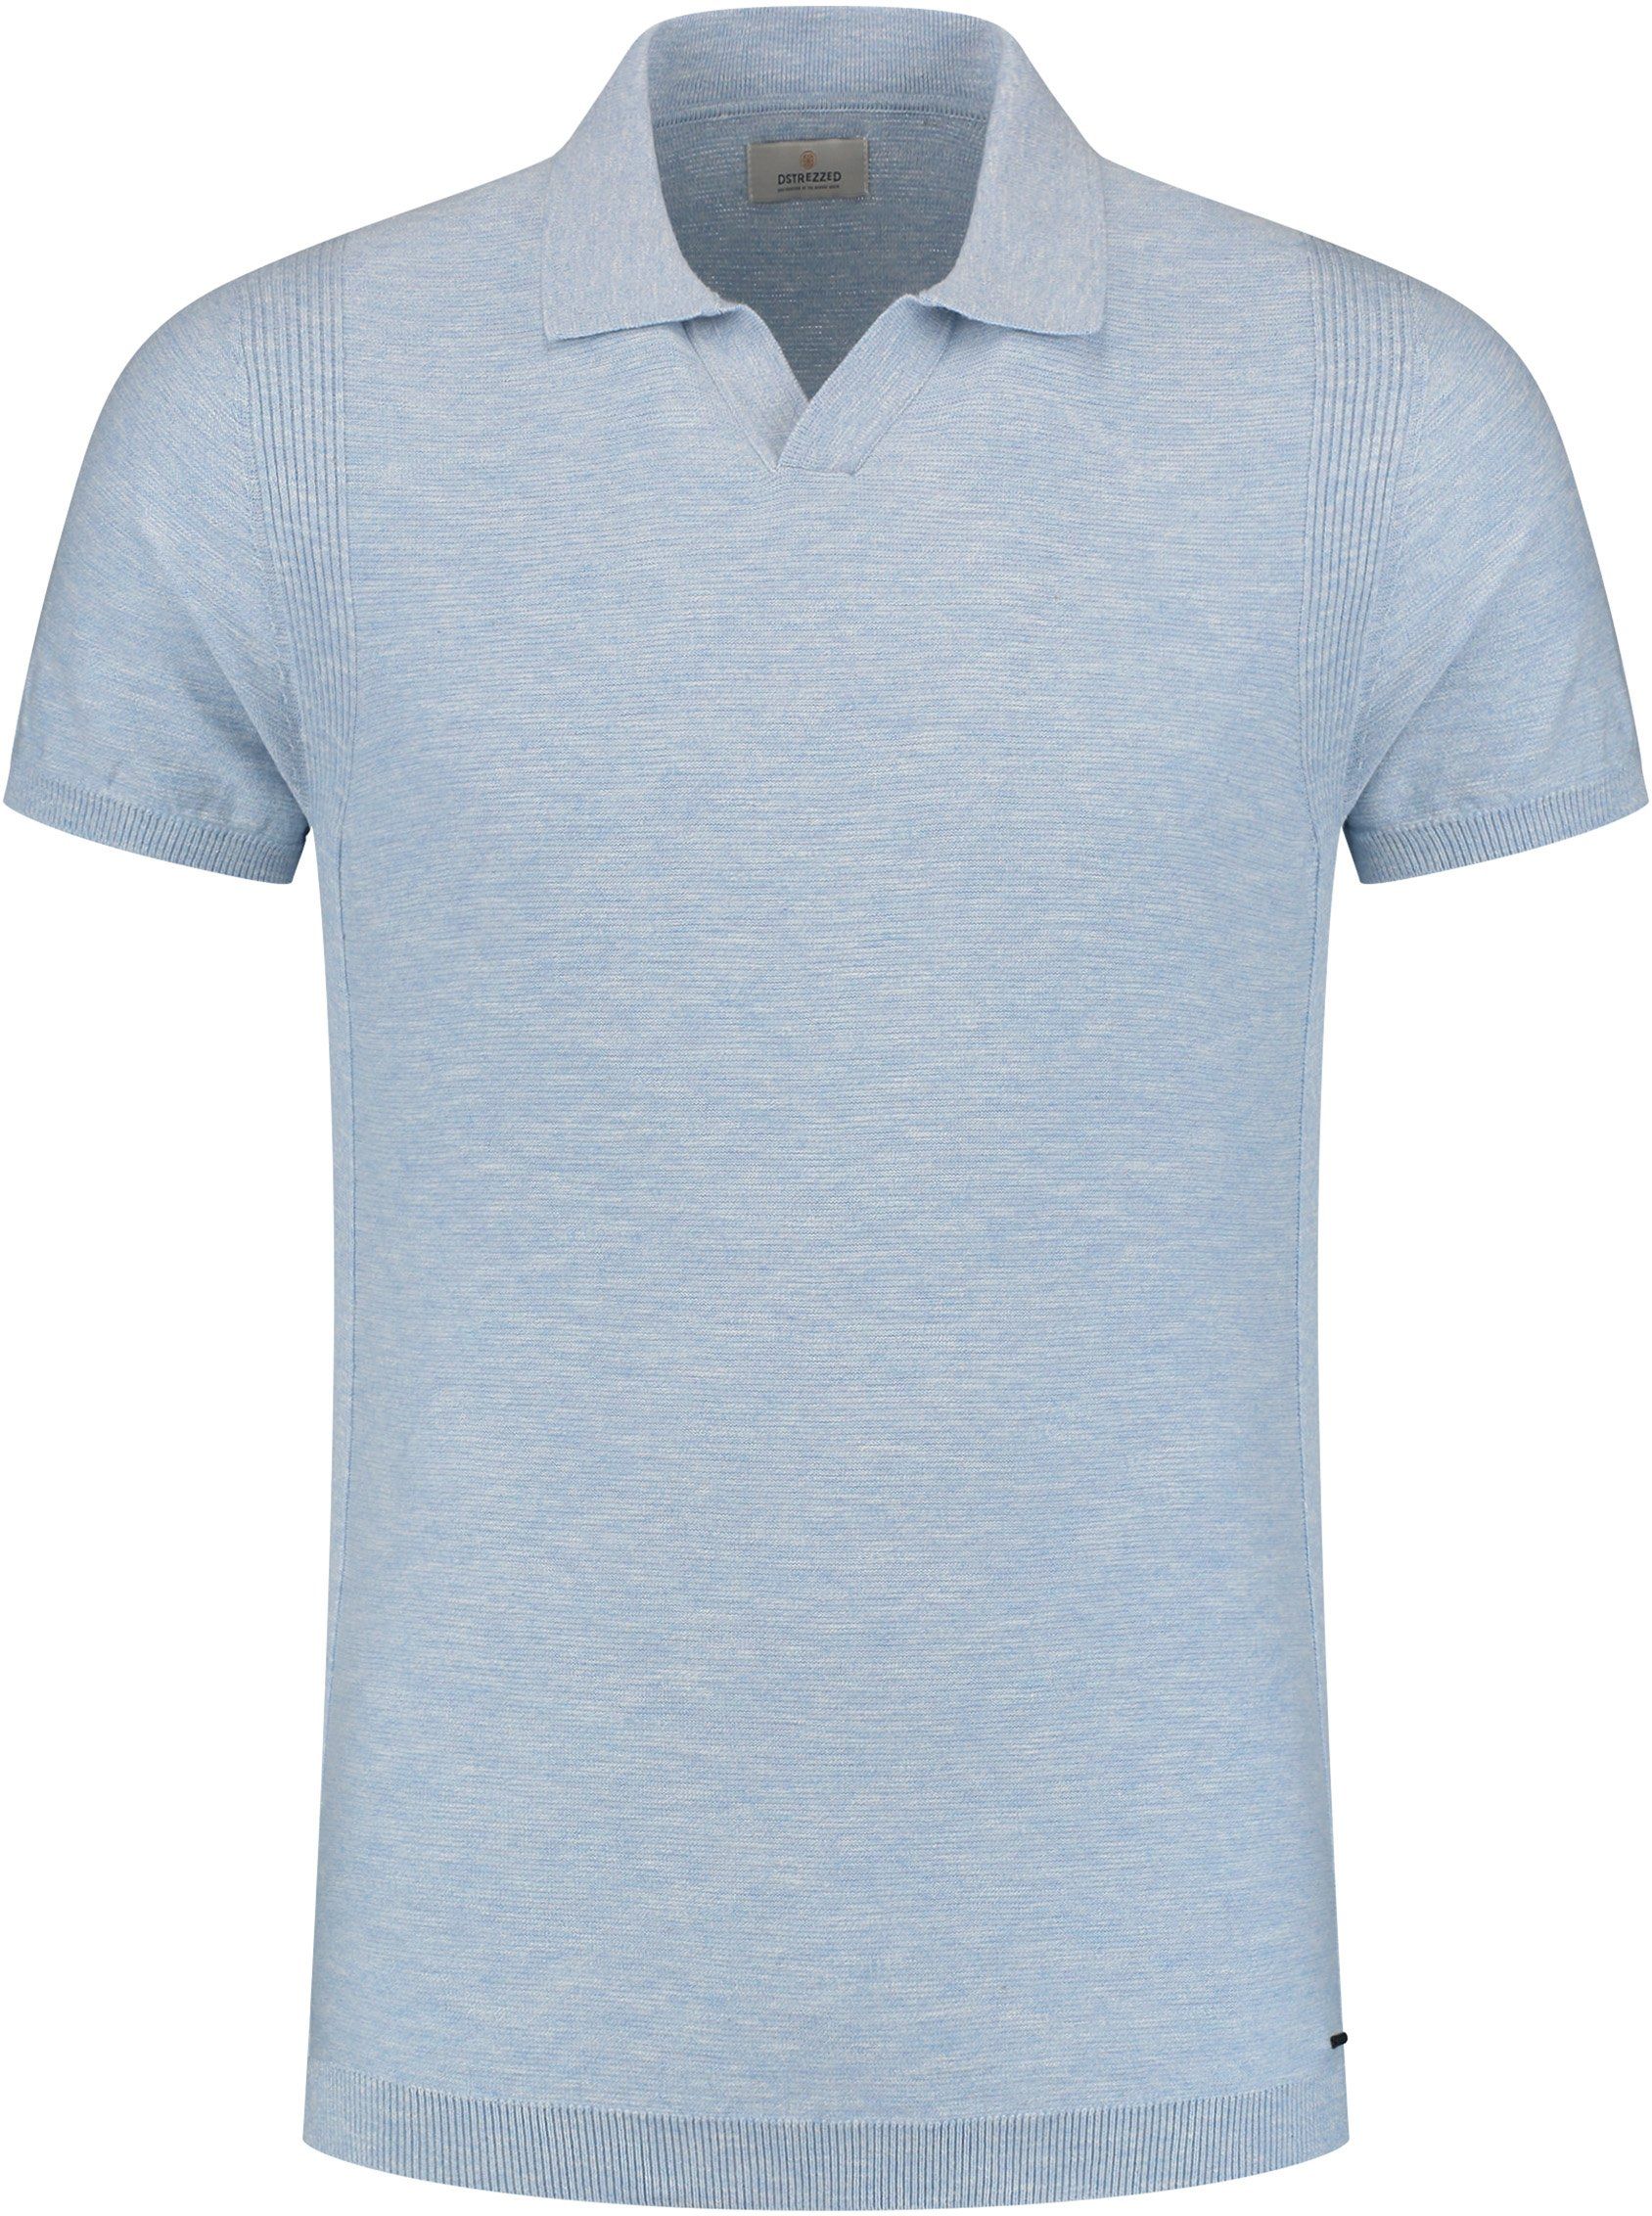 Dstrezzed Polo Shirt Melange Light Blue size L